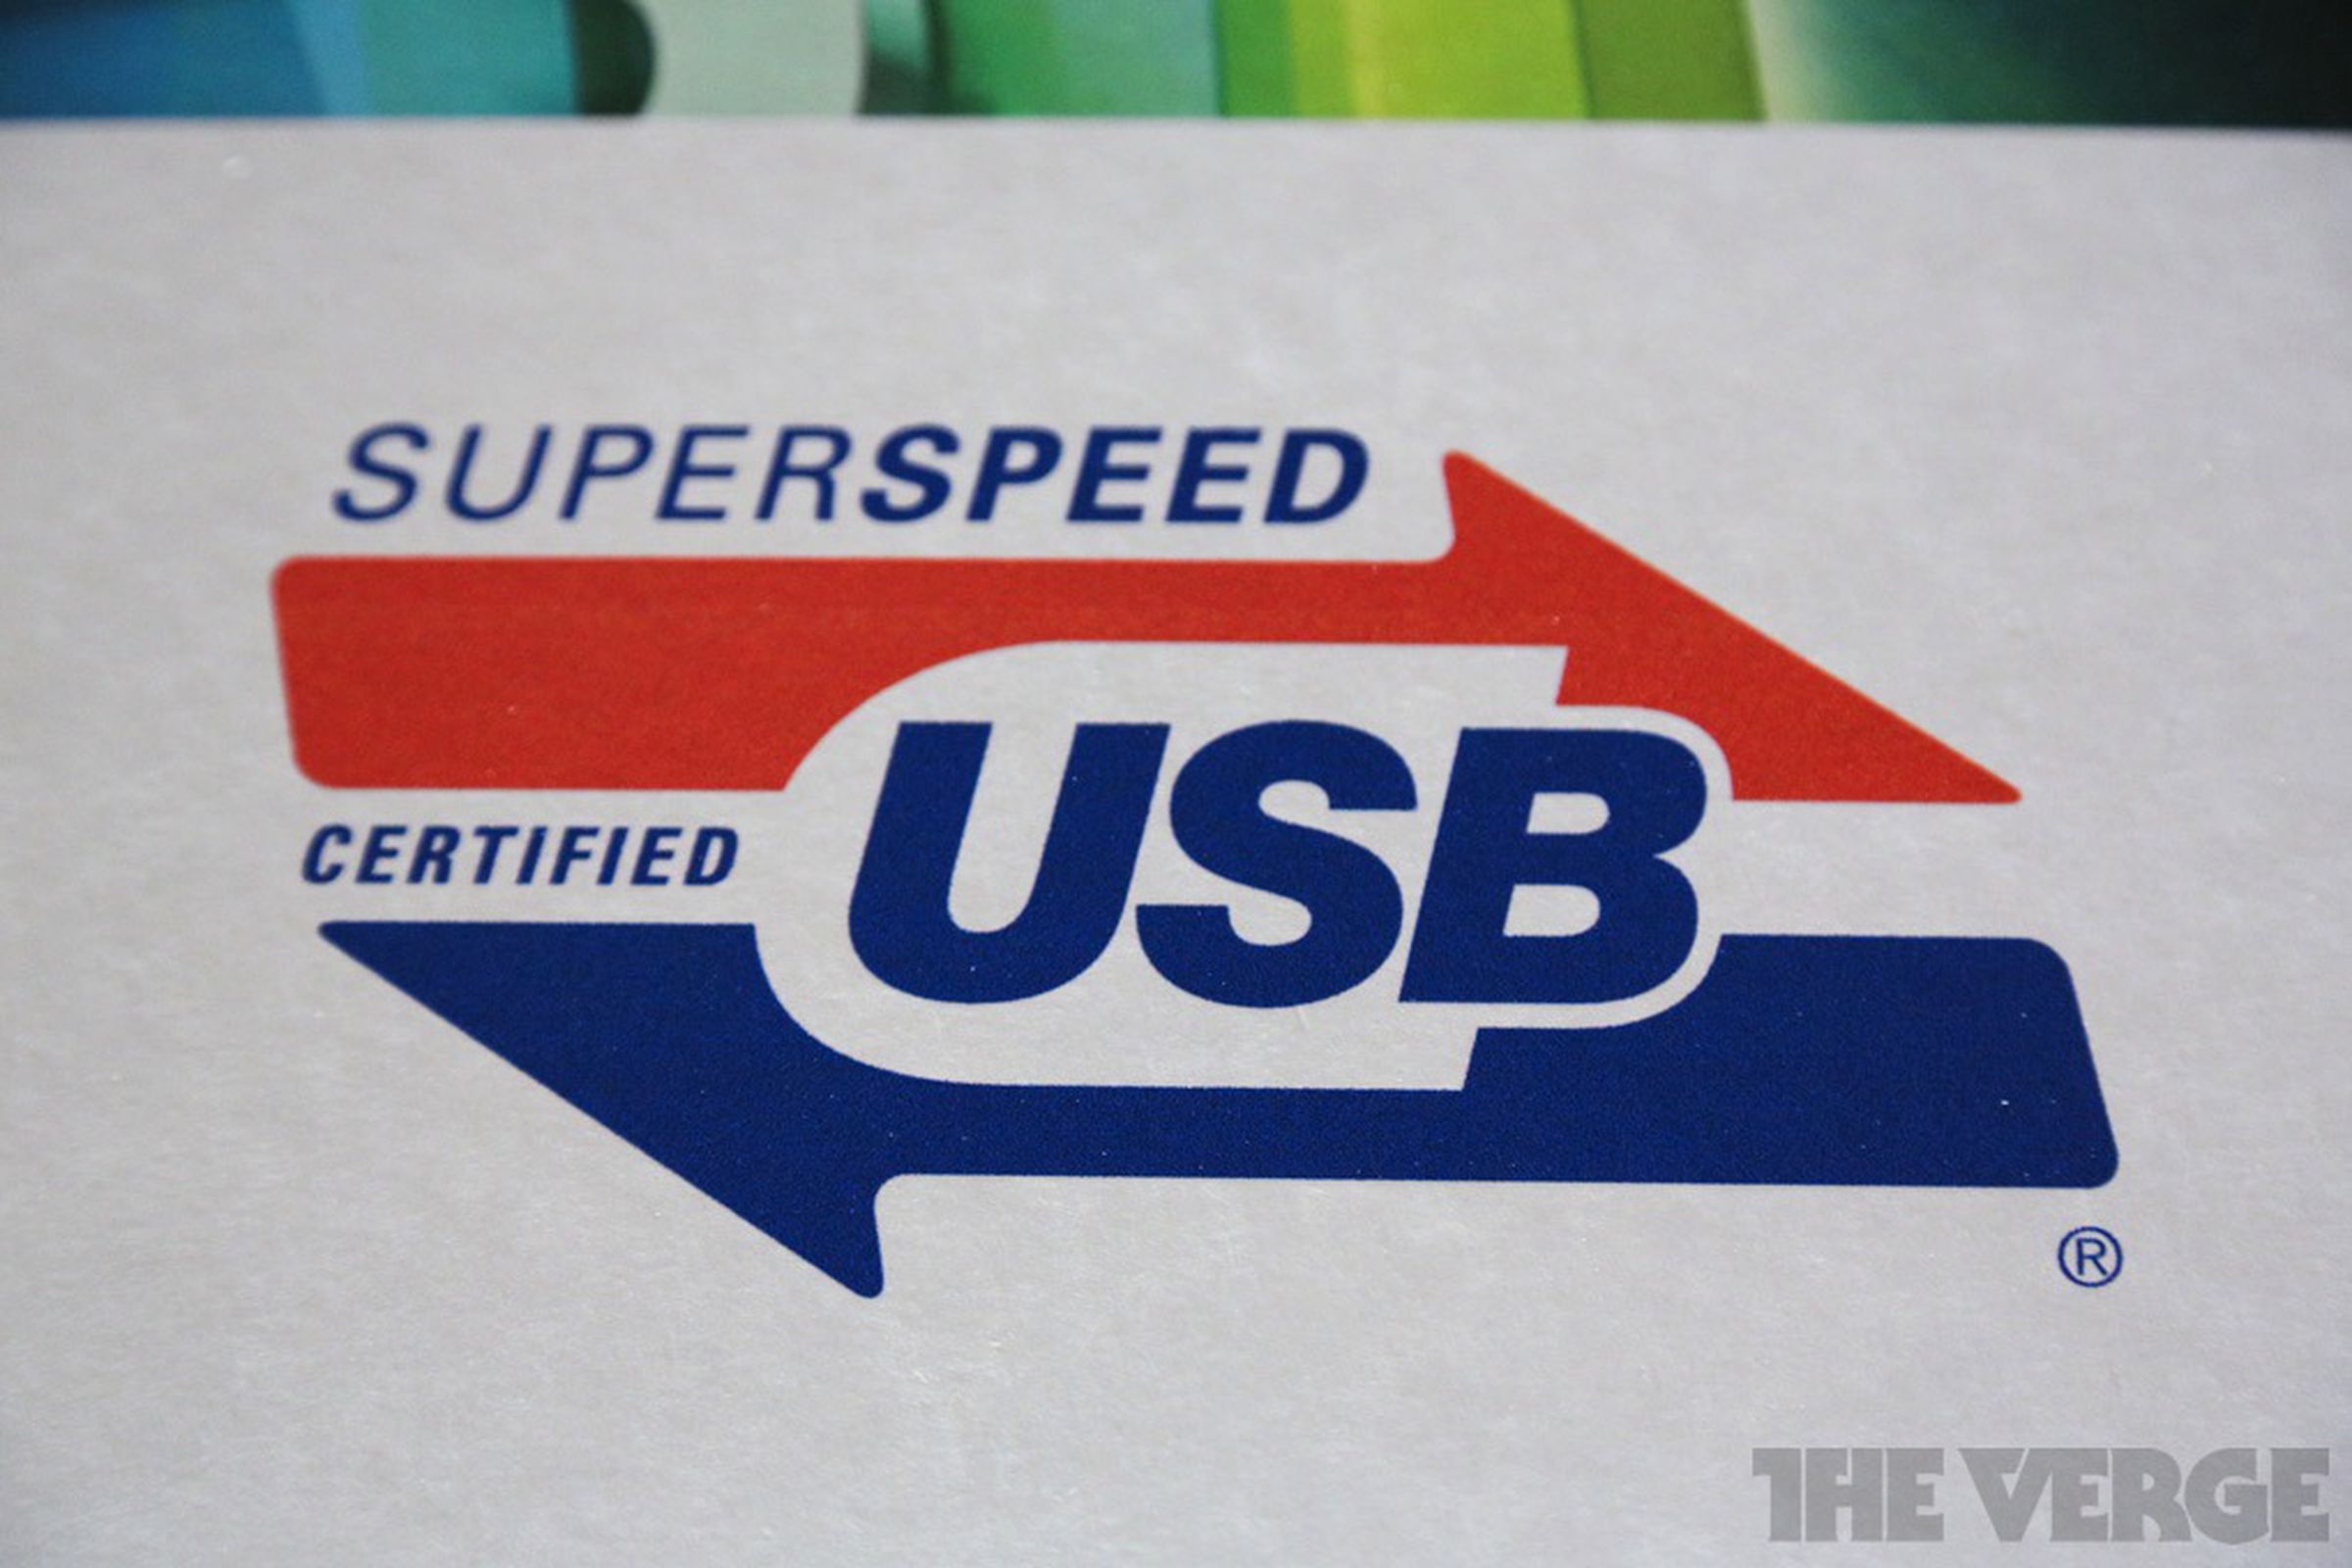 USB 3 SuperSpeed logo.